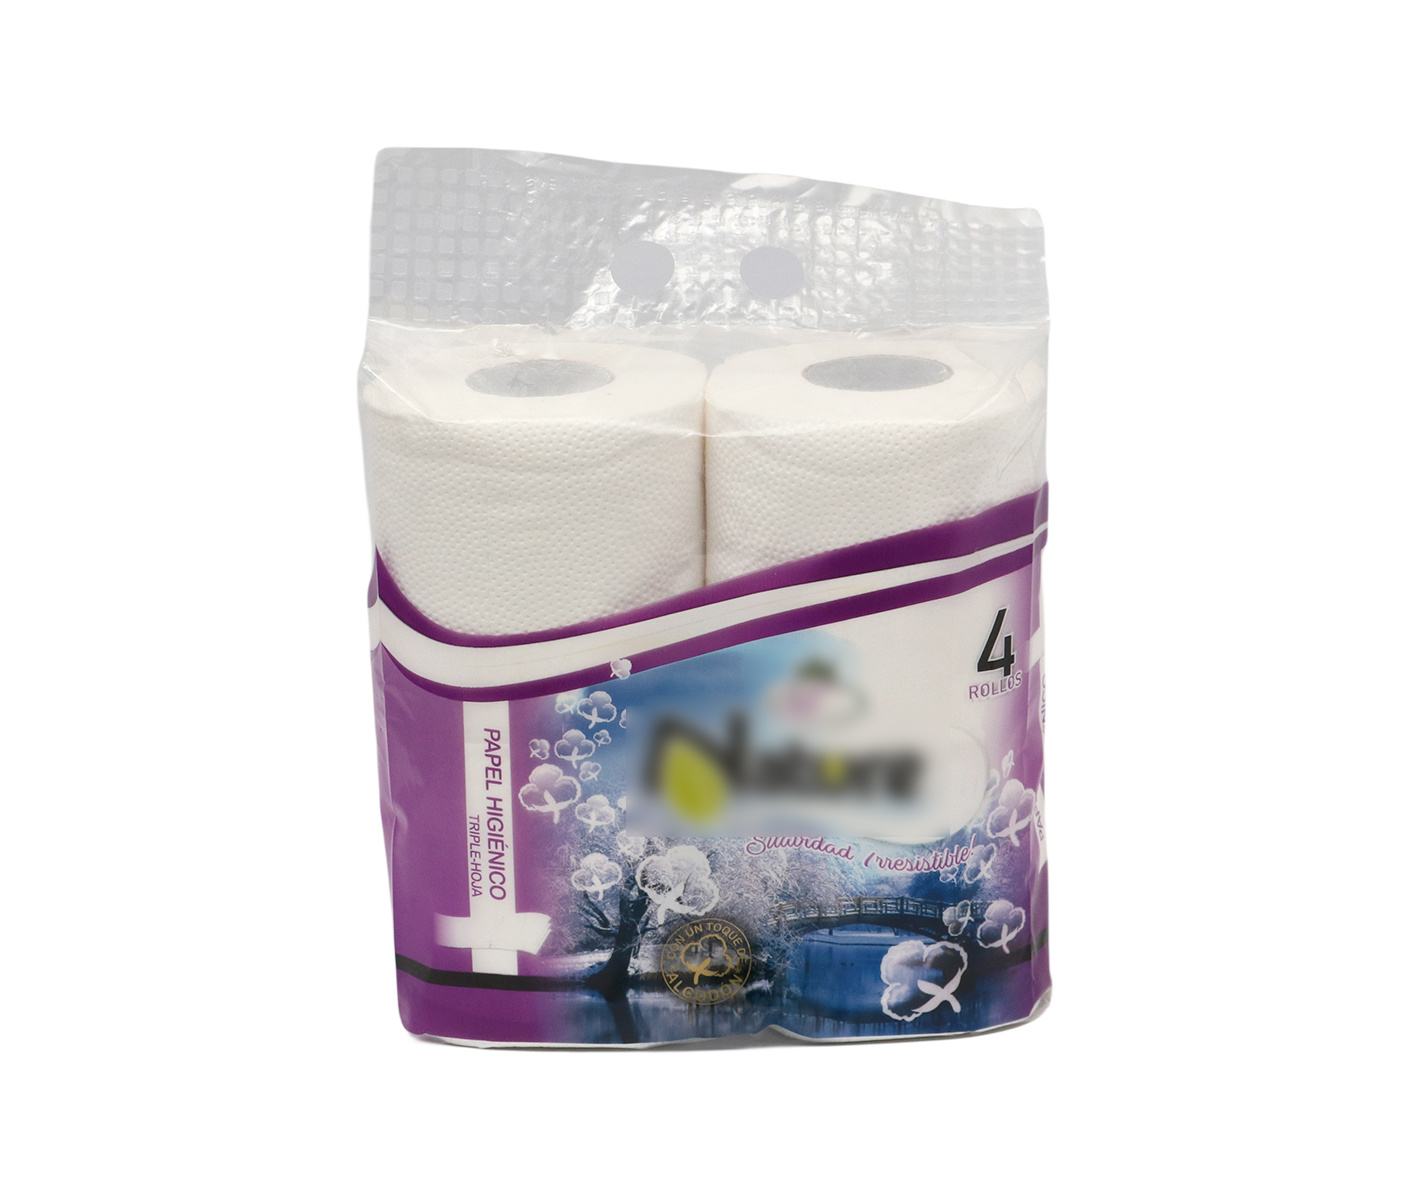 100g embossed toilet roll pack of 4